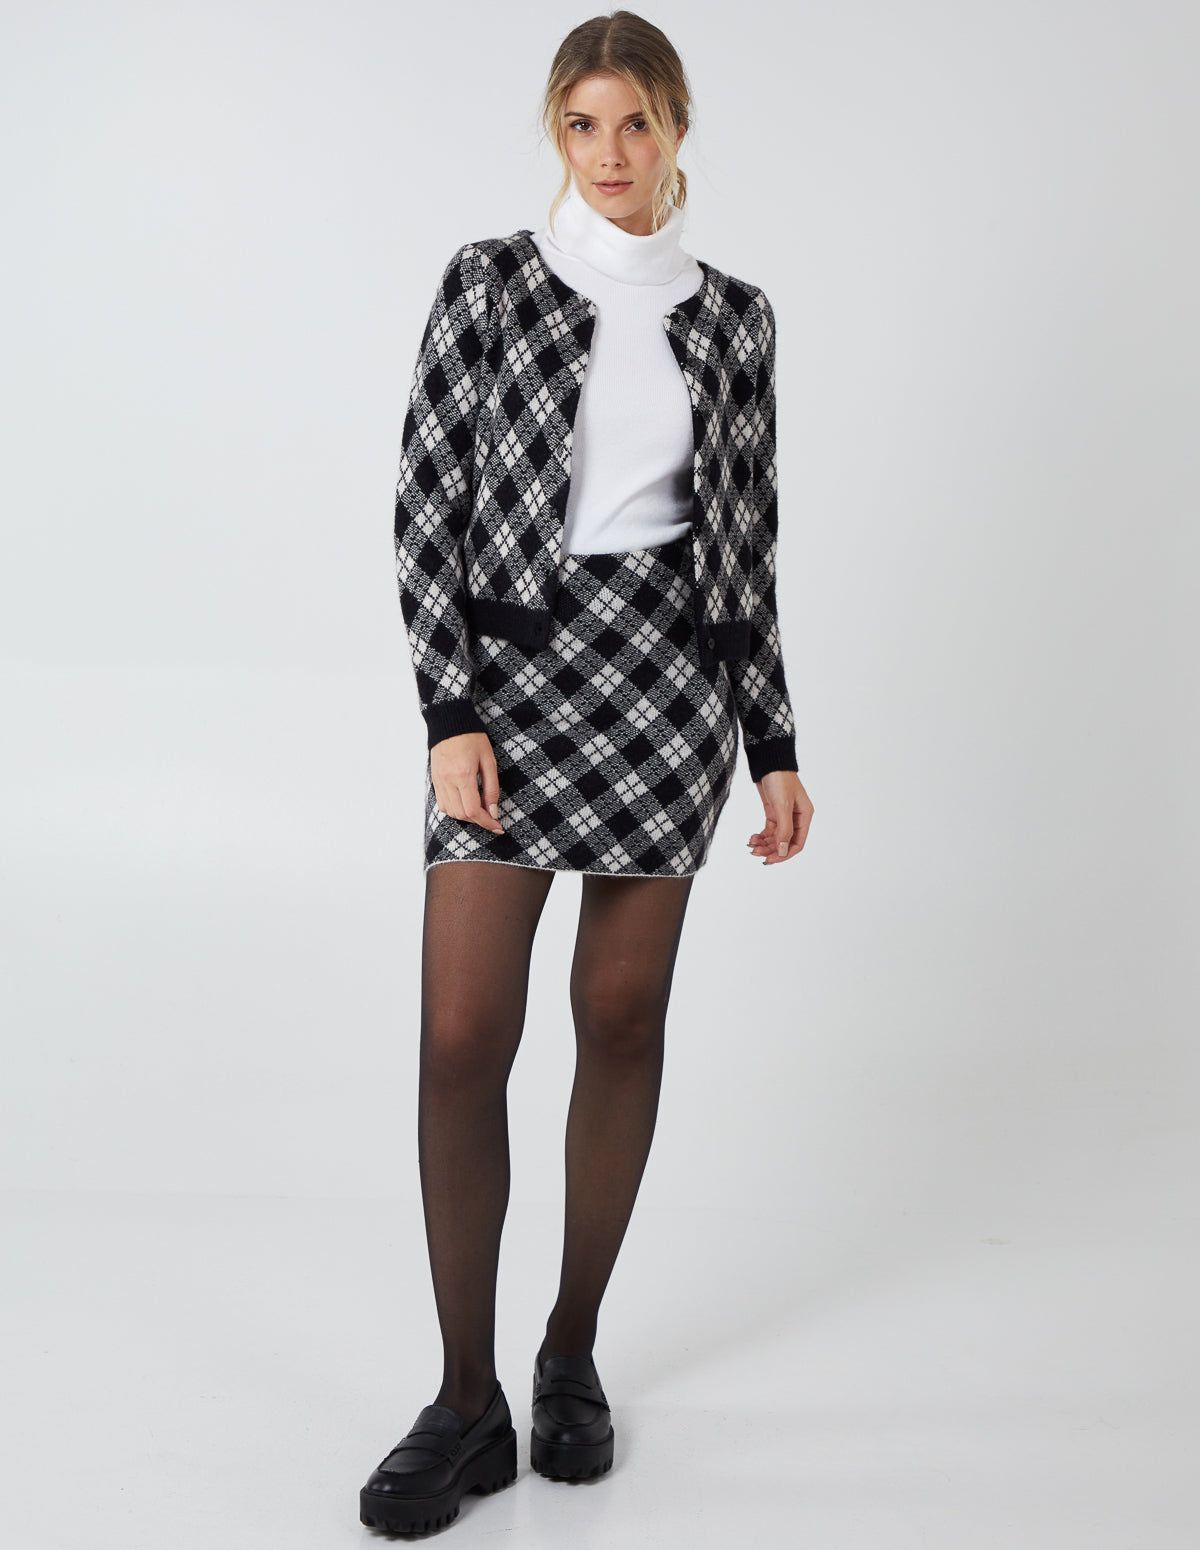 RACHEL - Argyle Cardigan & Skirt Set